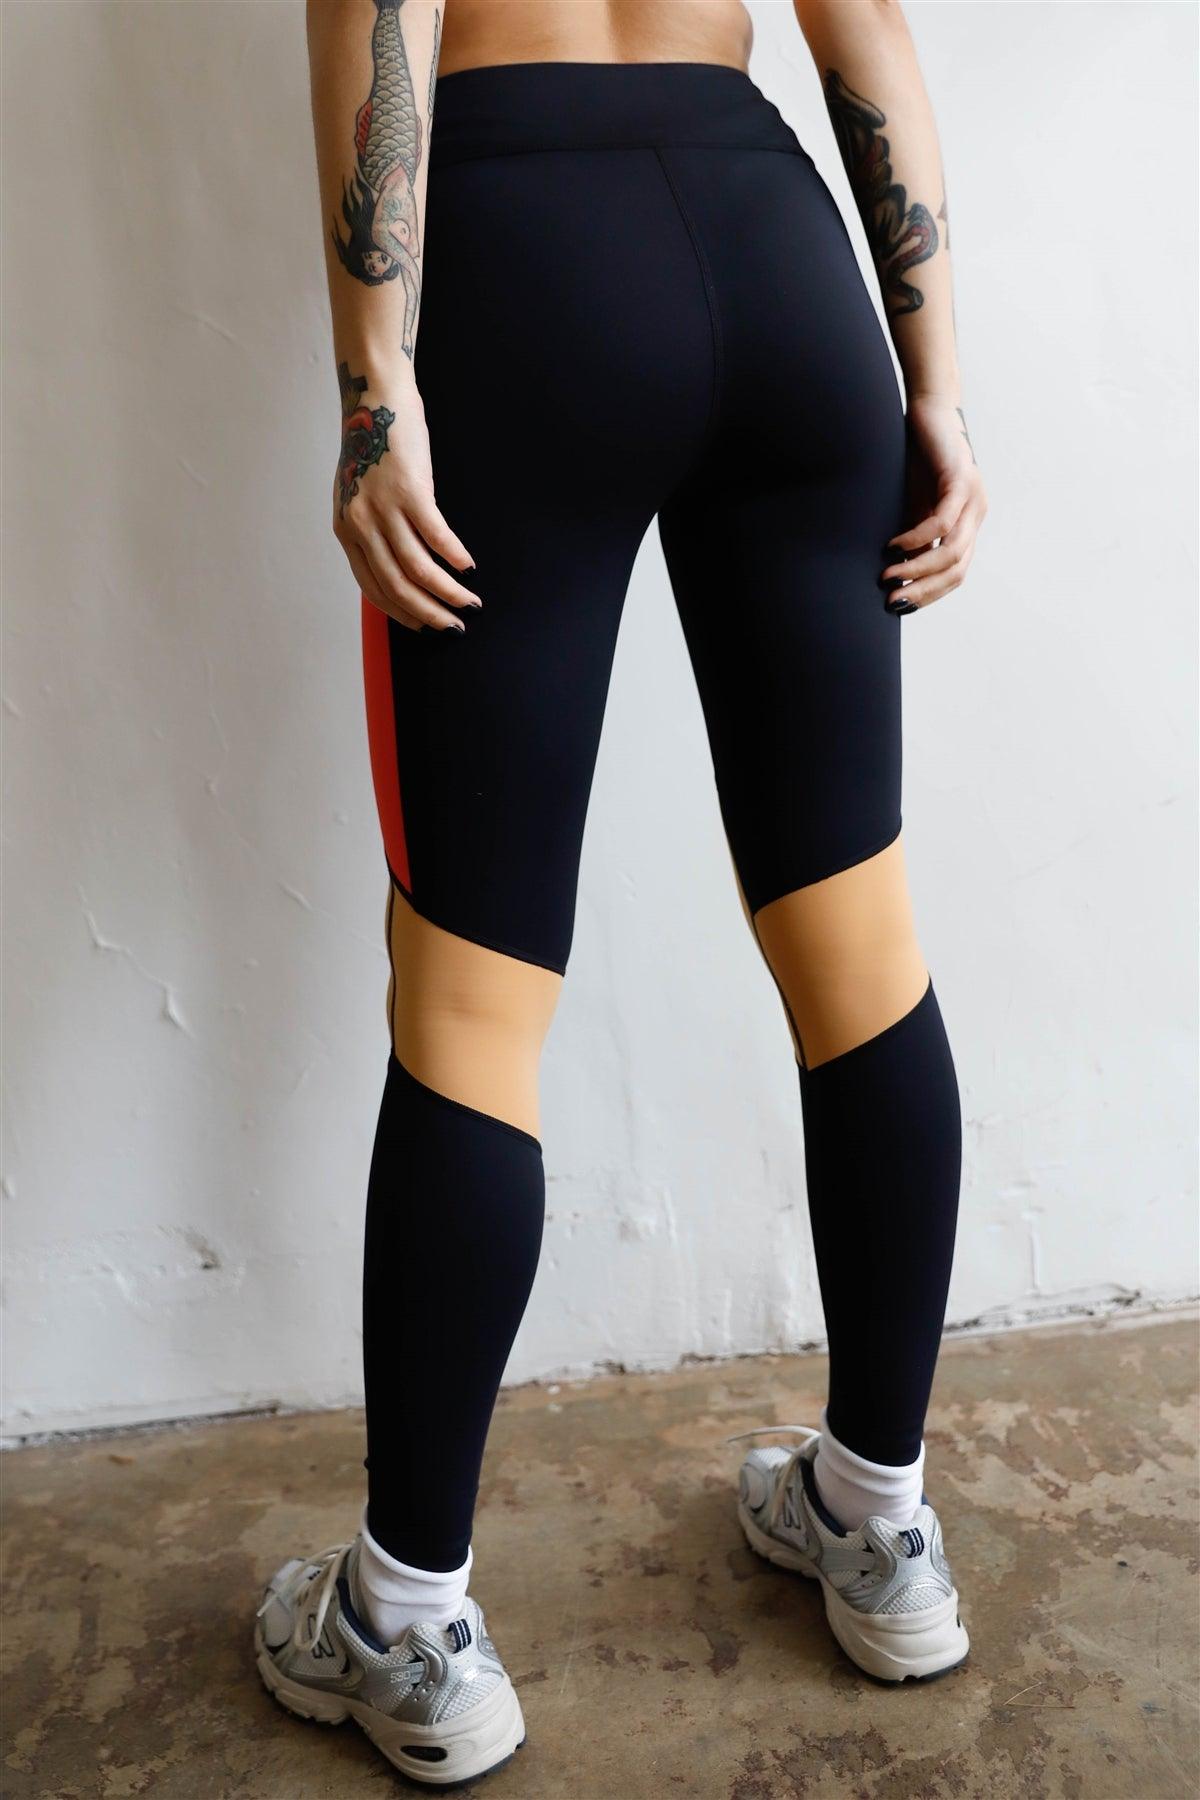 Black Multi Colorblock High Waist Legging Sport Activewear Pants /1-3